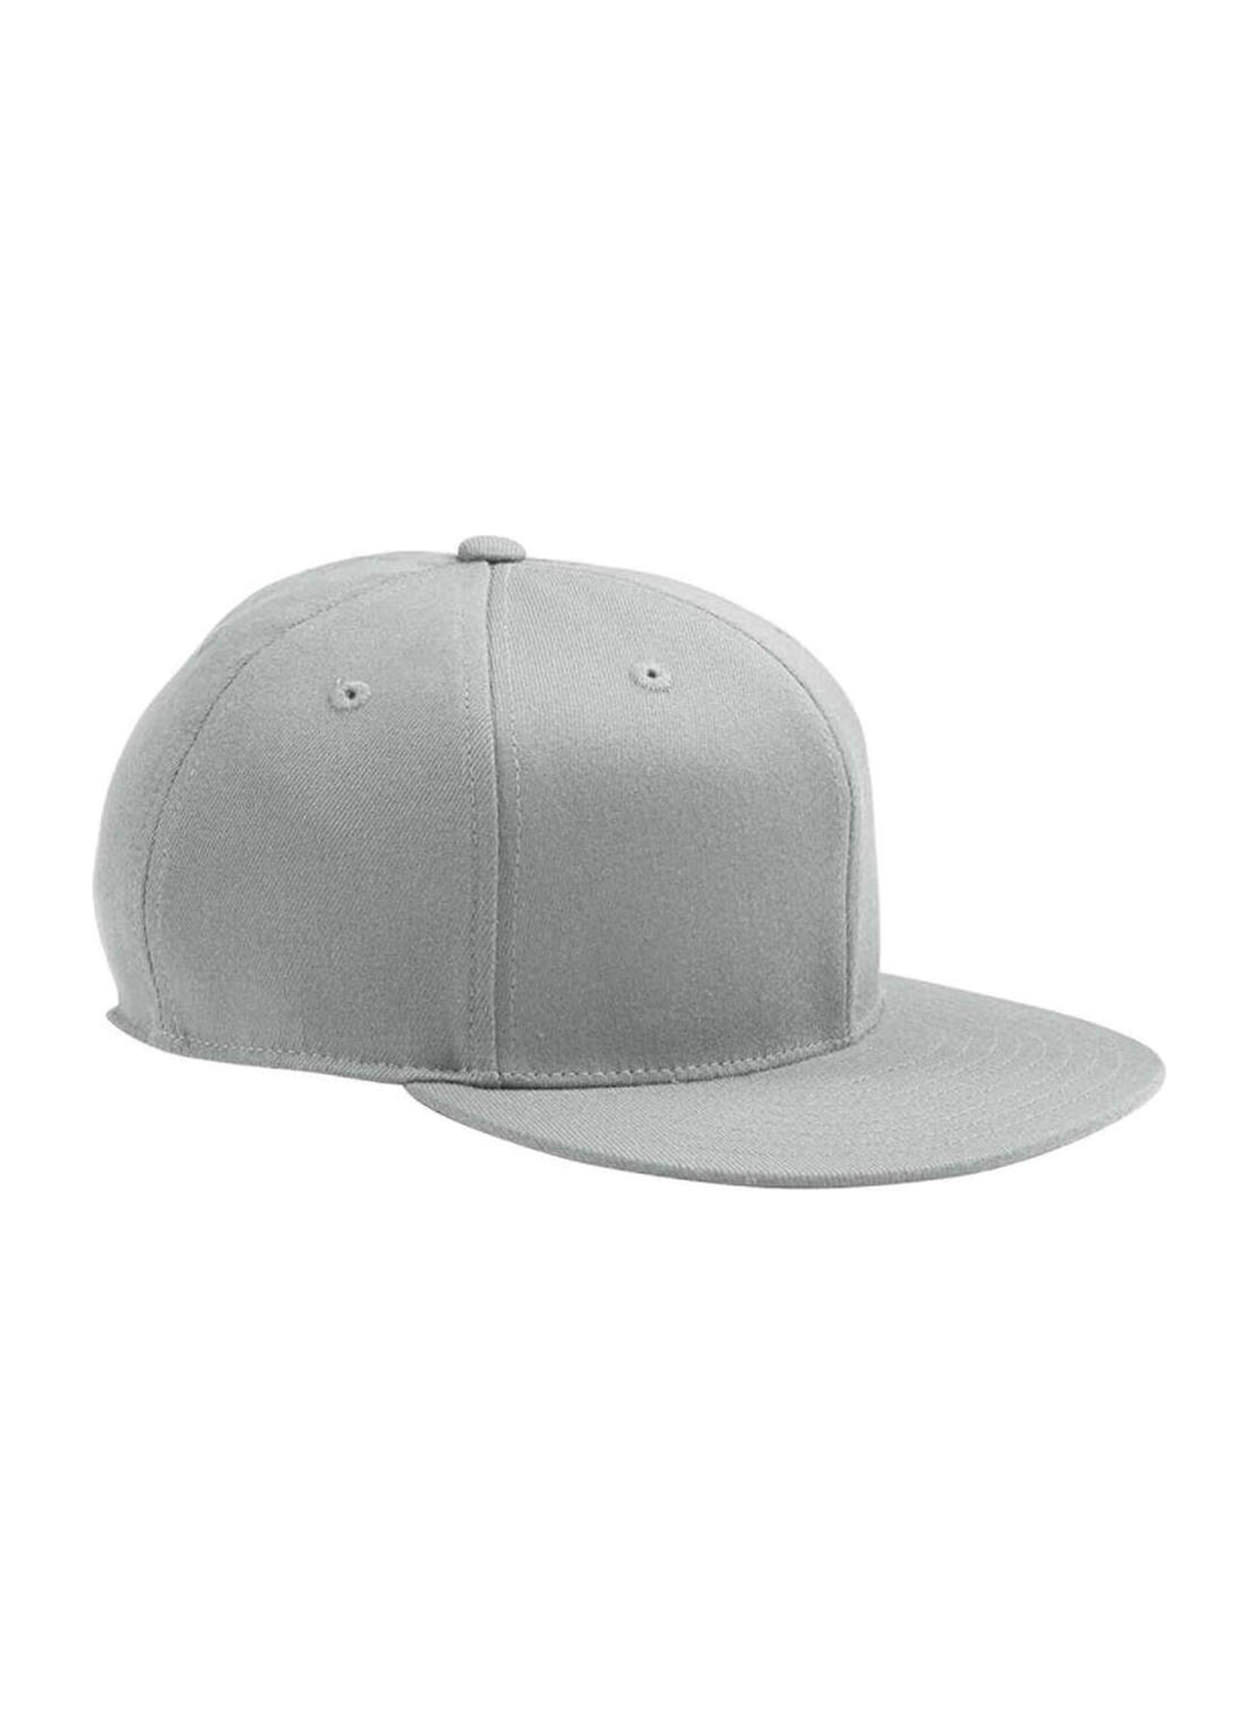 Flexfit Grey Premium 210 Fitted Hat